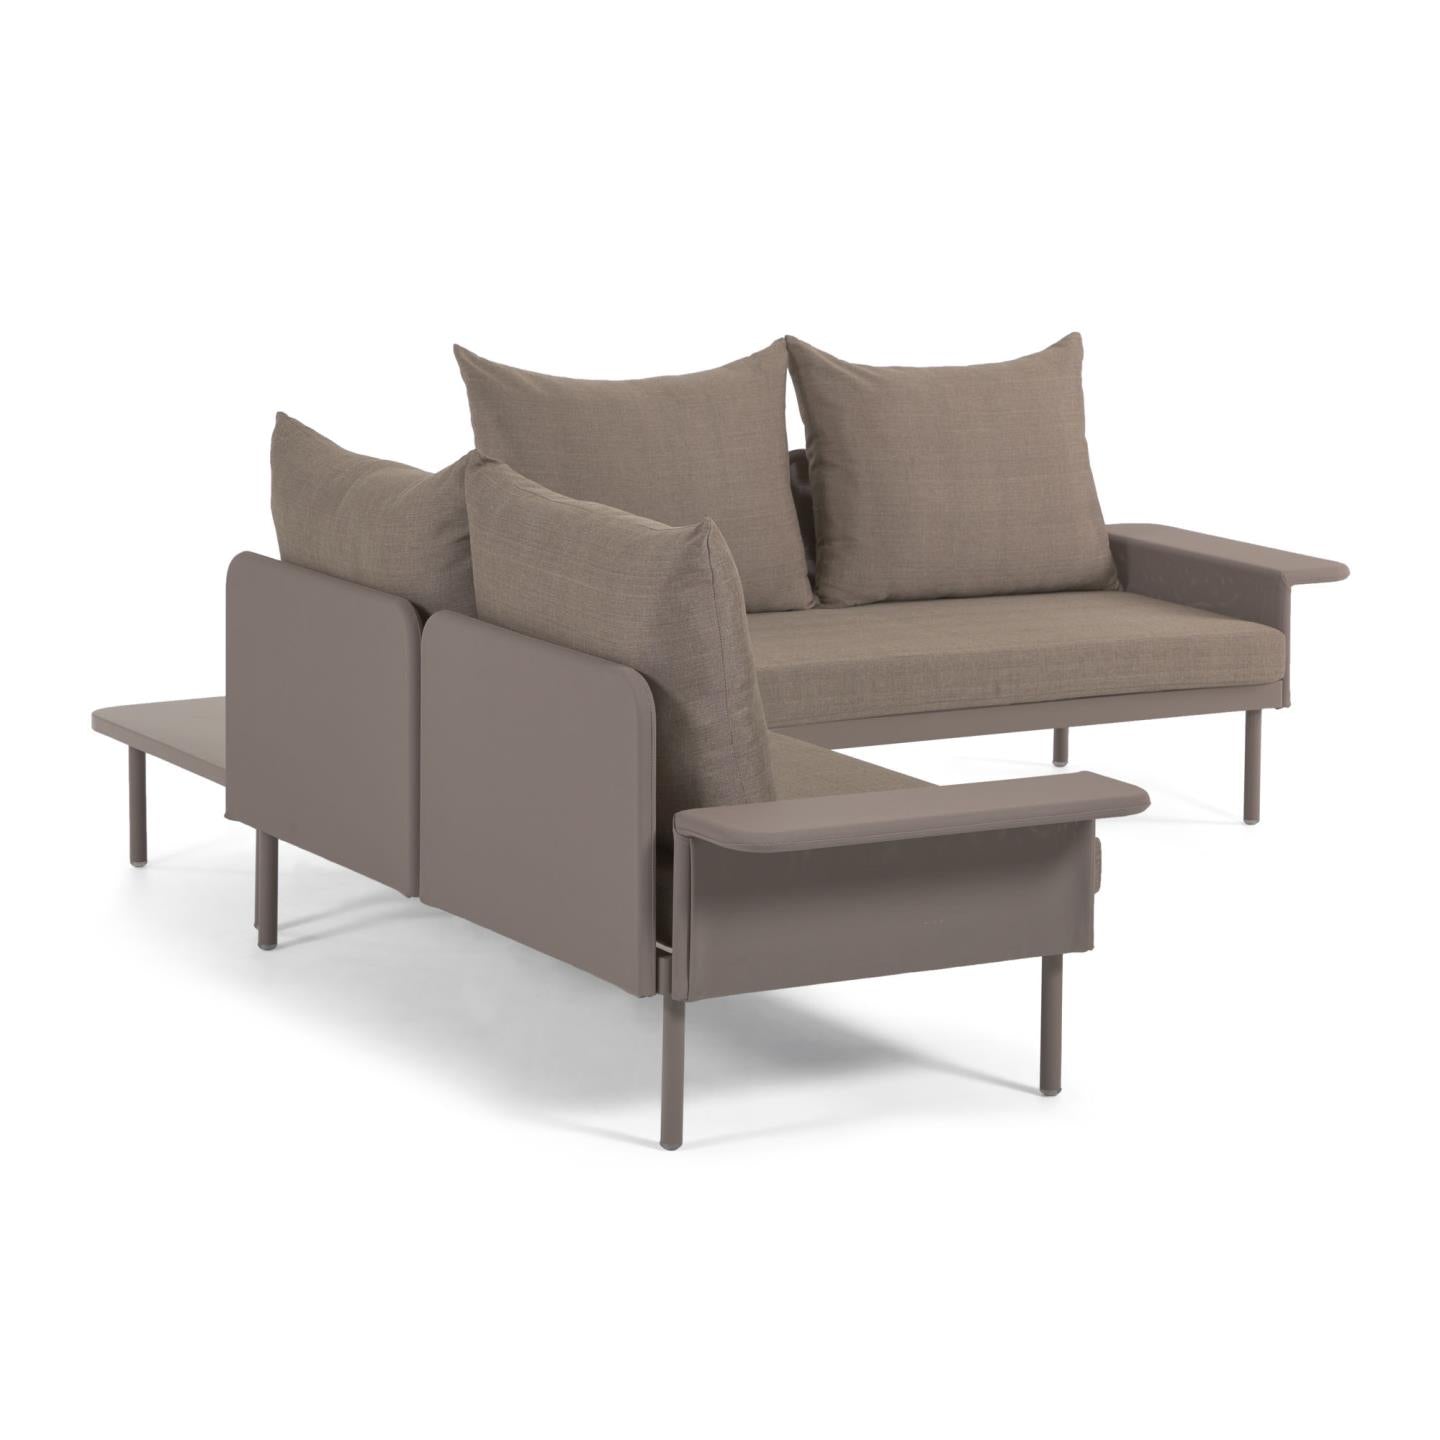 Zaltana outdoor corner sofa and table set in matte brown aluminium, 164 cm